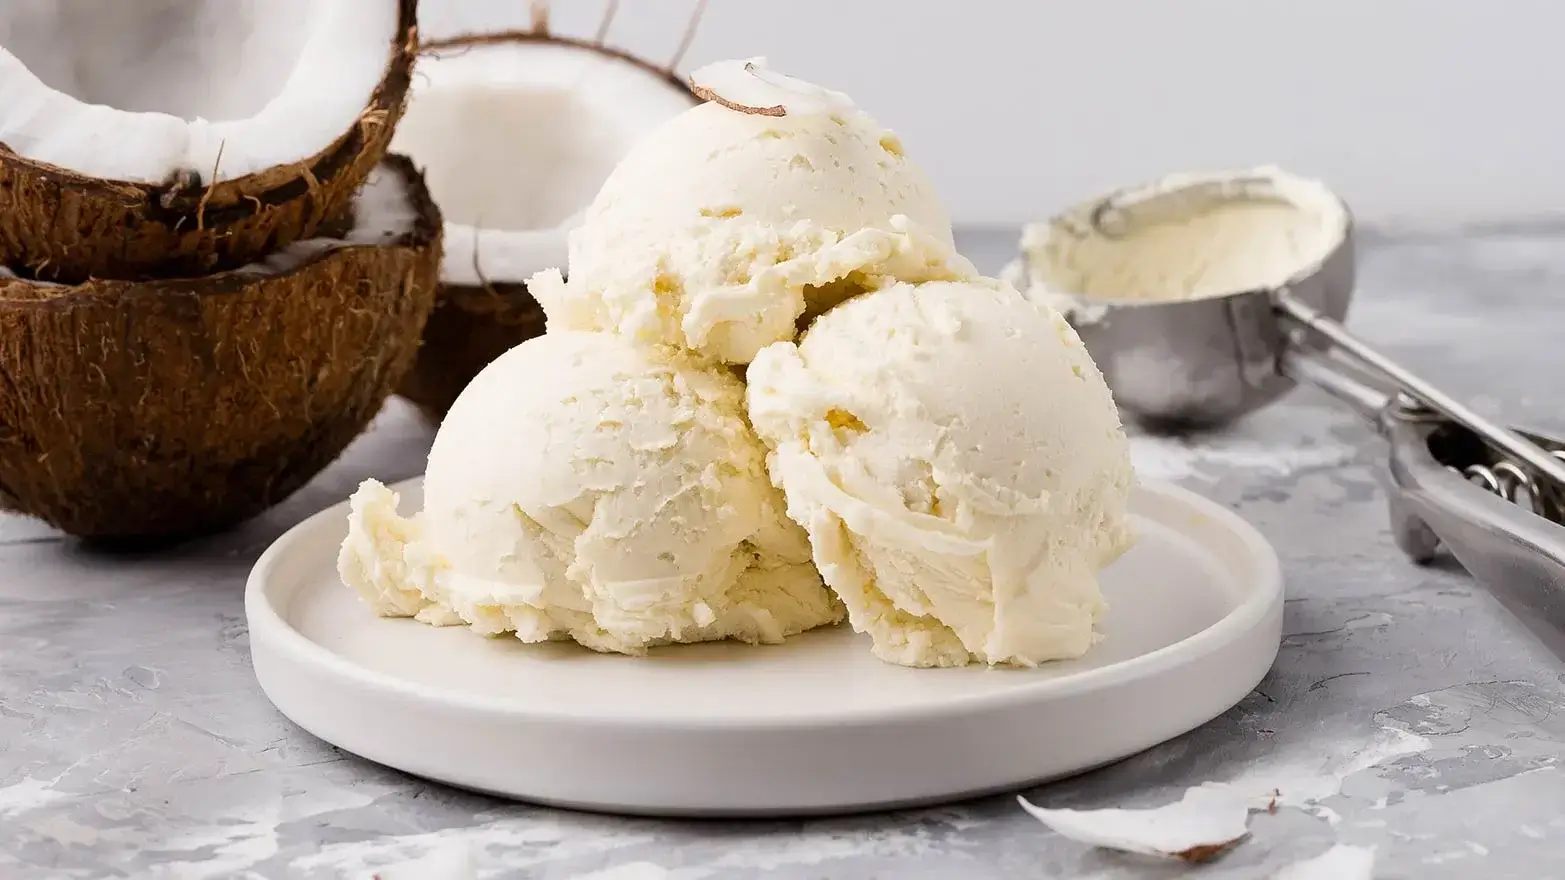 ice cream made from coconut milk